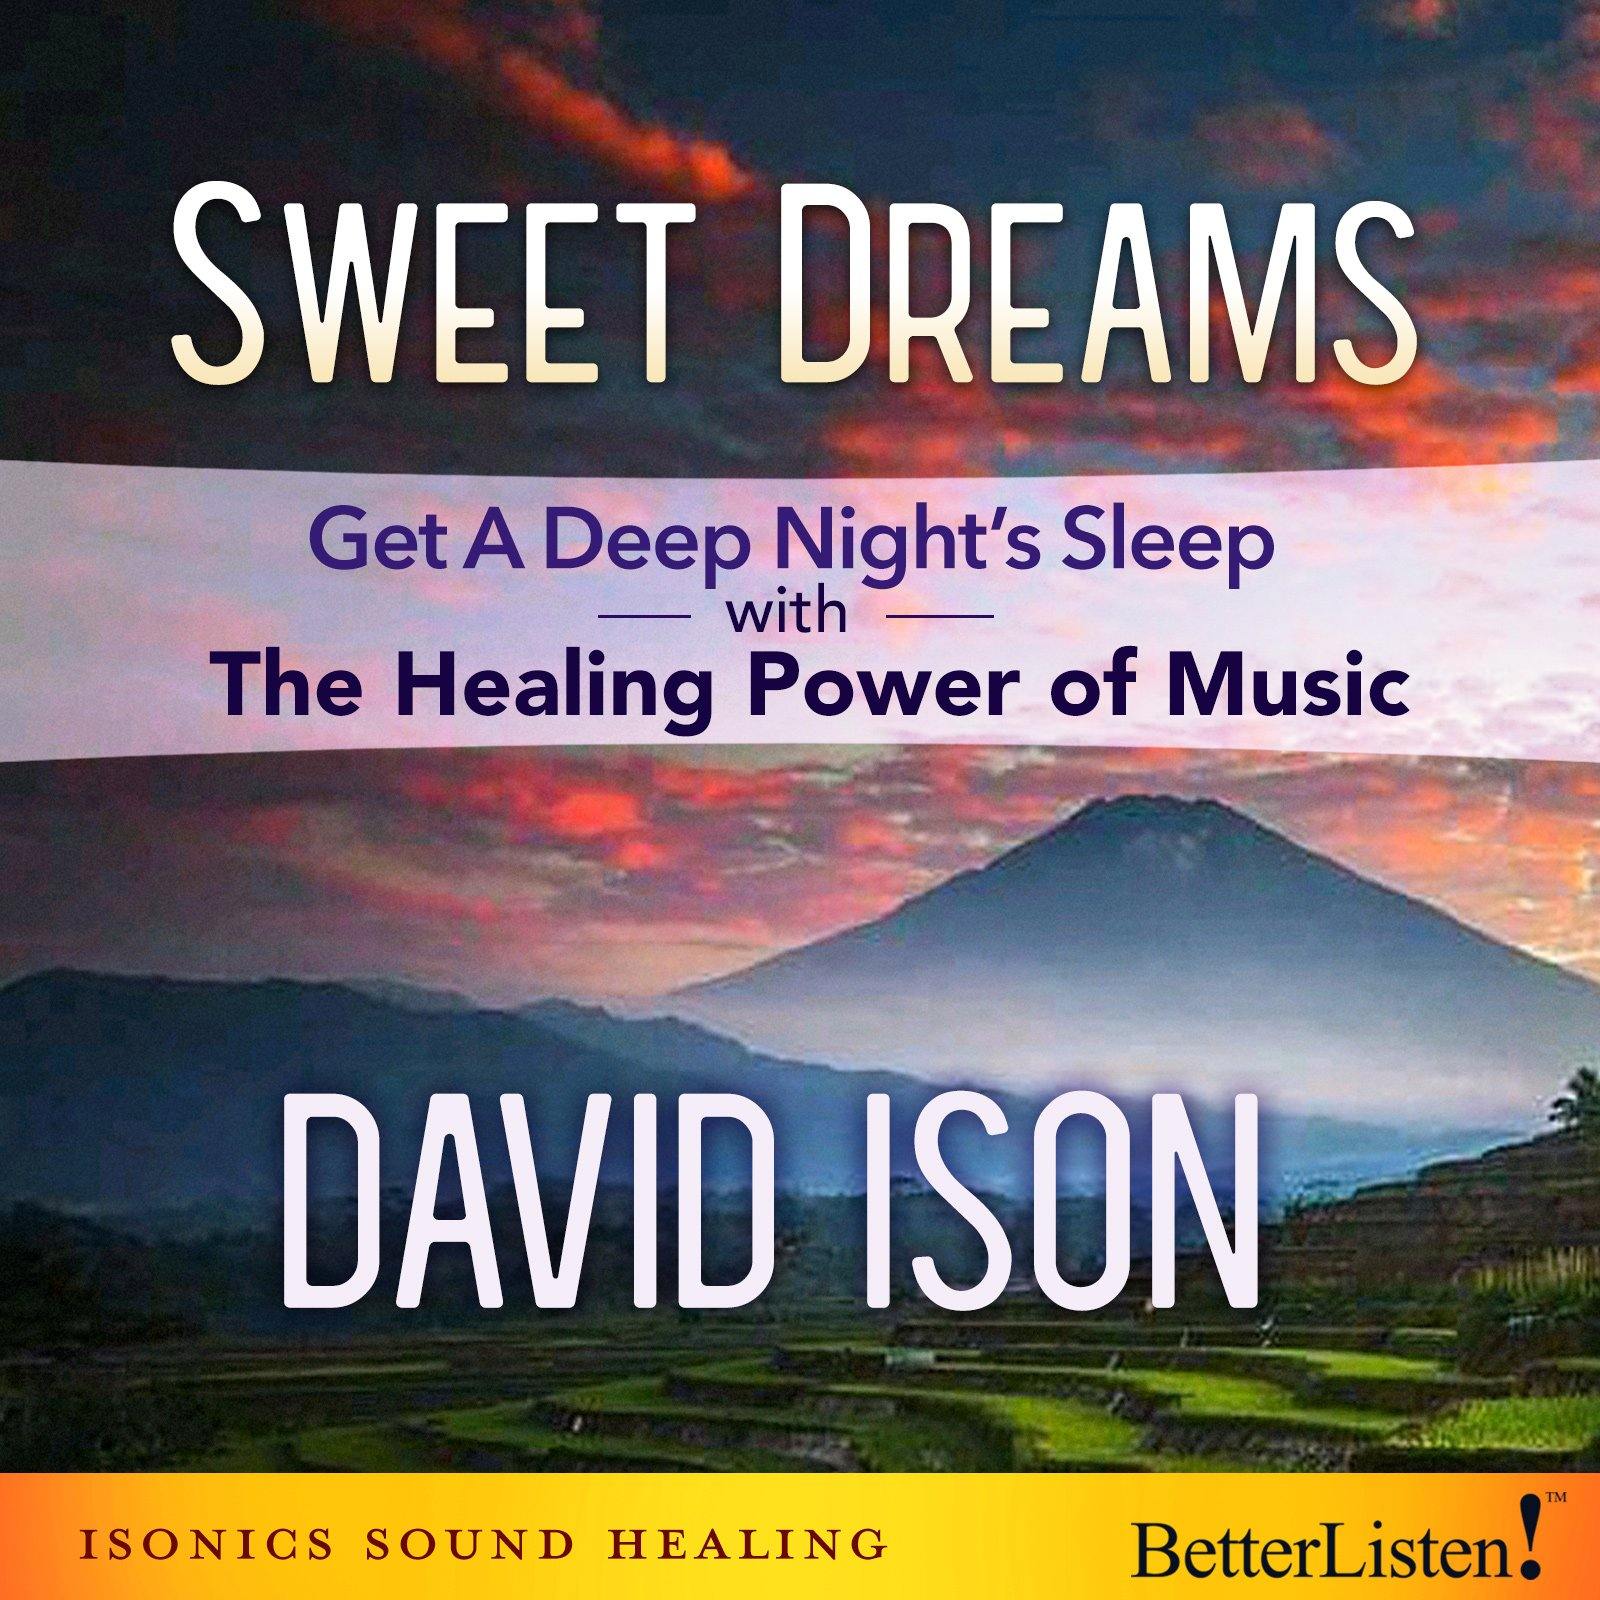 Sweet Dreams with David Ison - BetterListen!